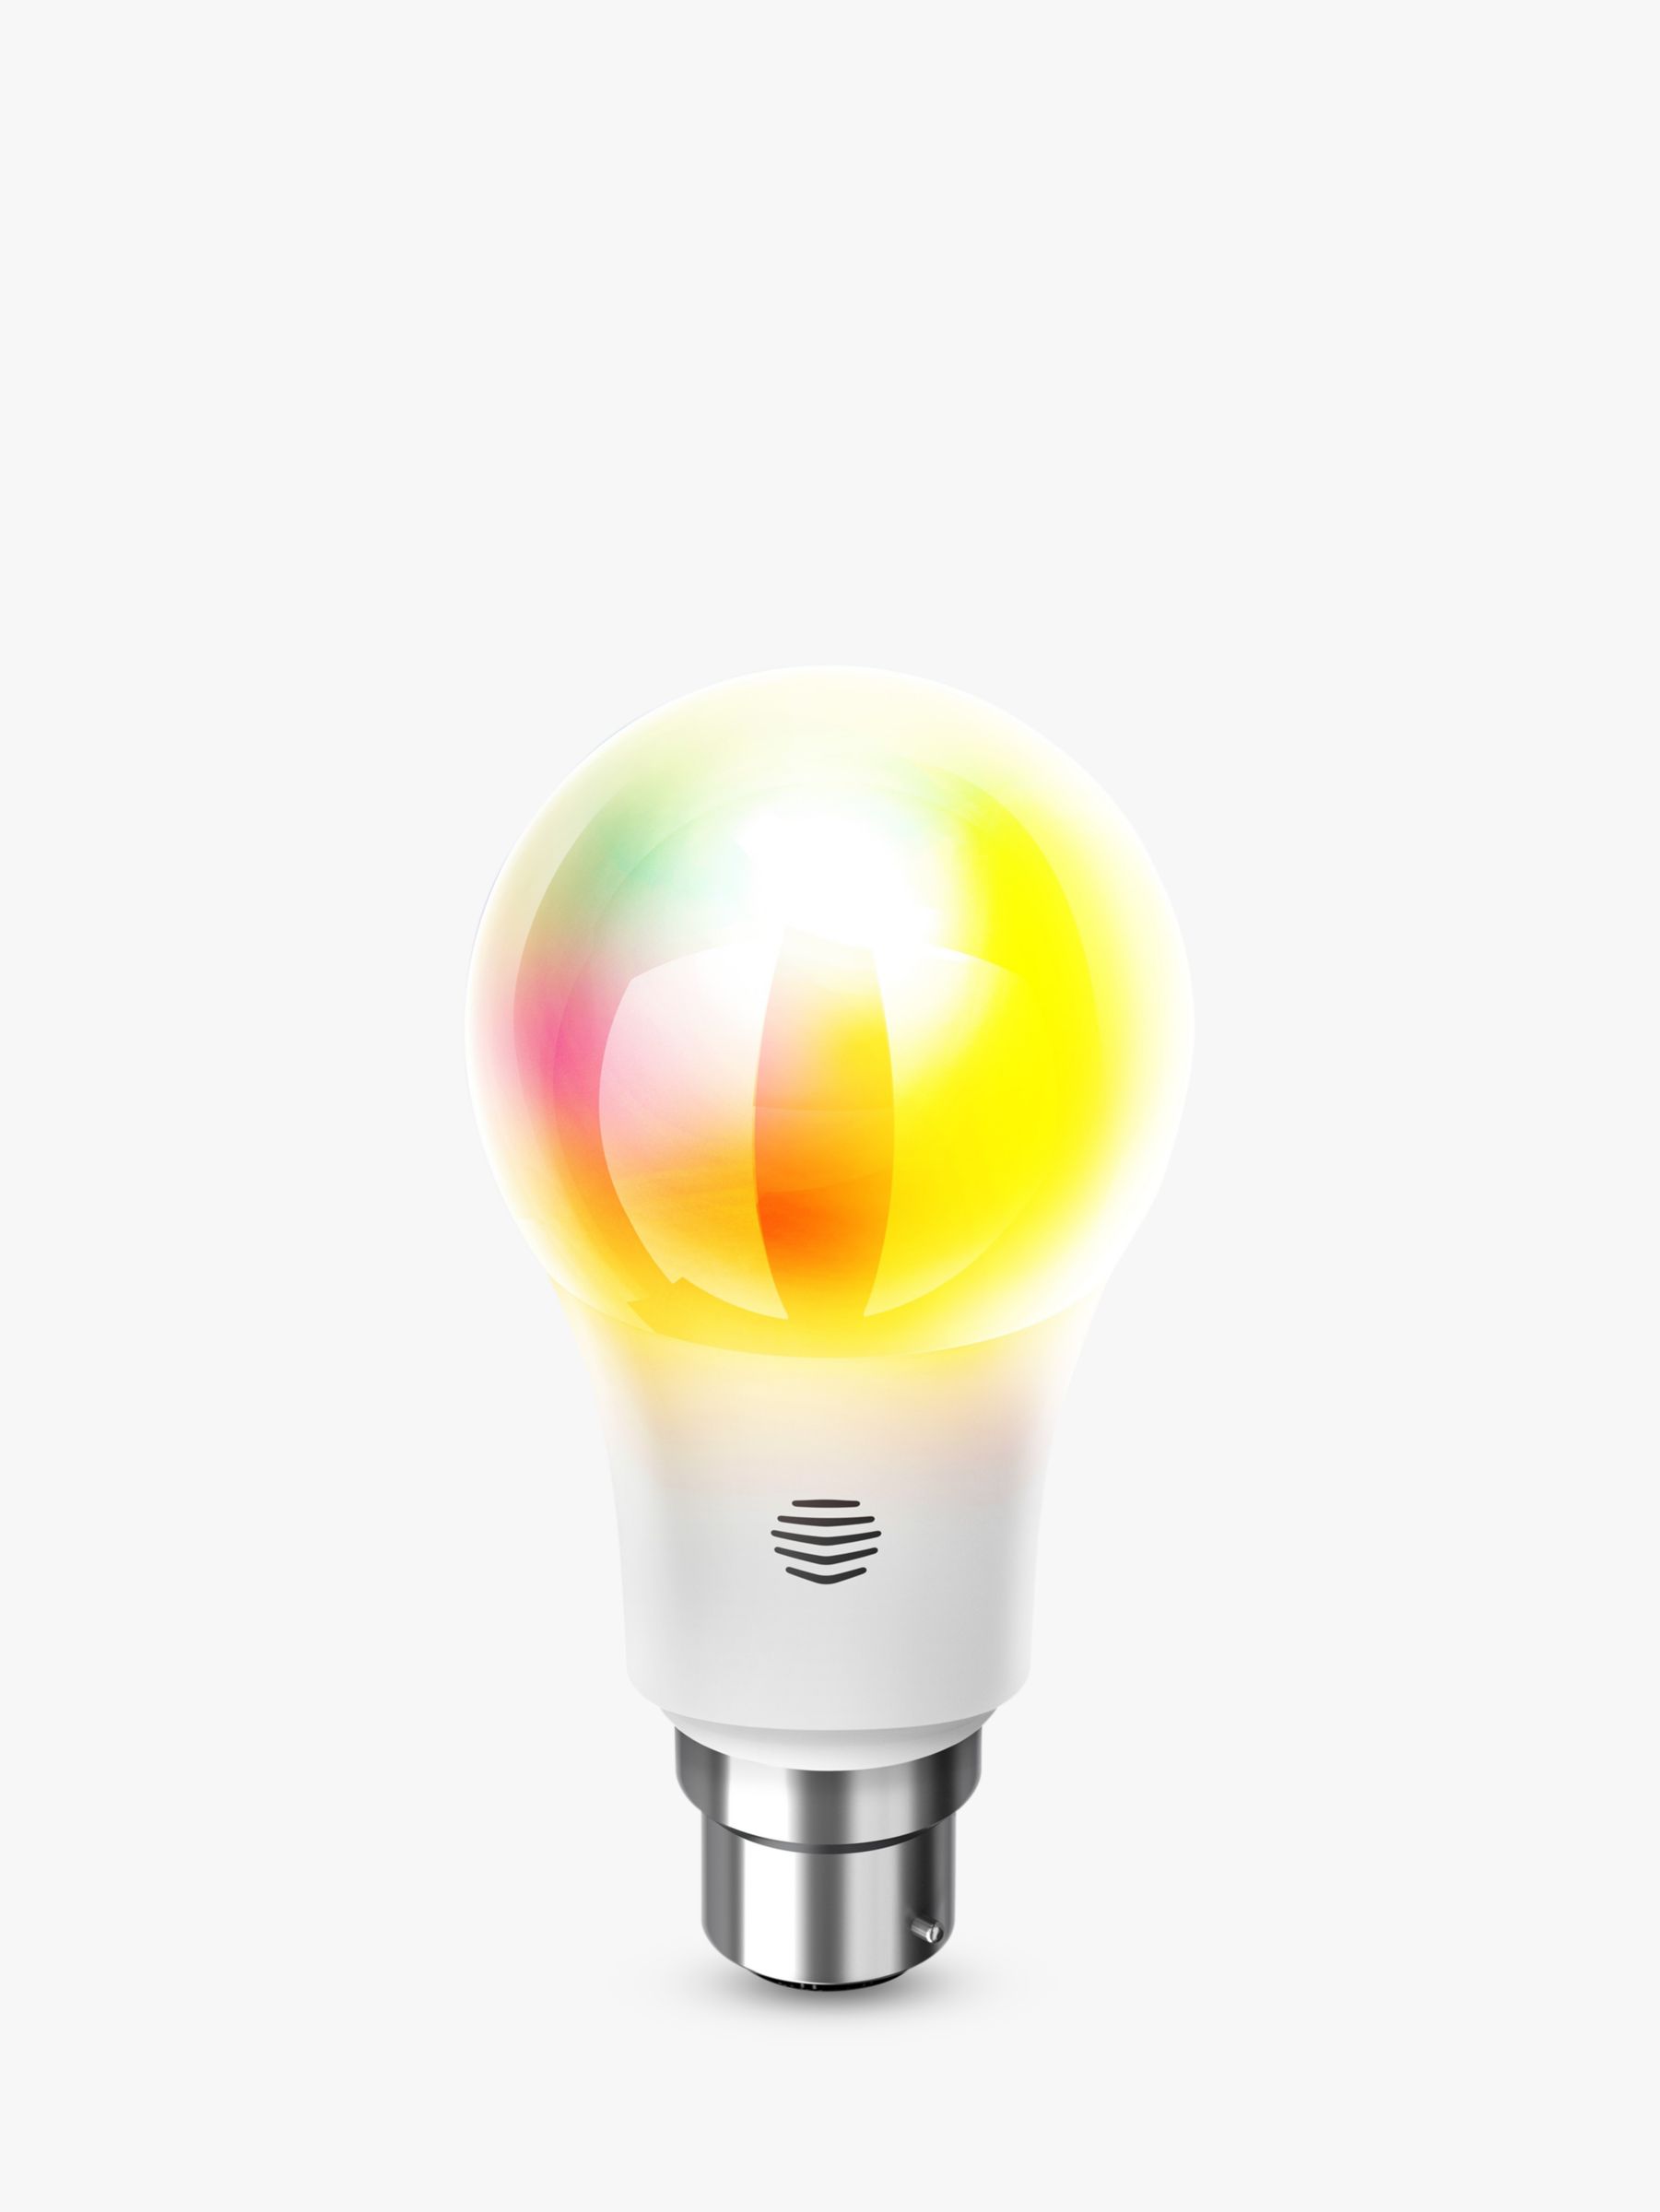 Hive Active Light Colour Changing Wireless Lighting LED Light Bulb, 9.5W A60 B22 Bayonet Bulb, Single